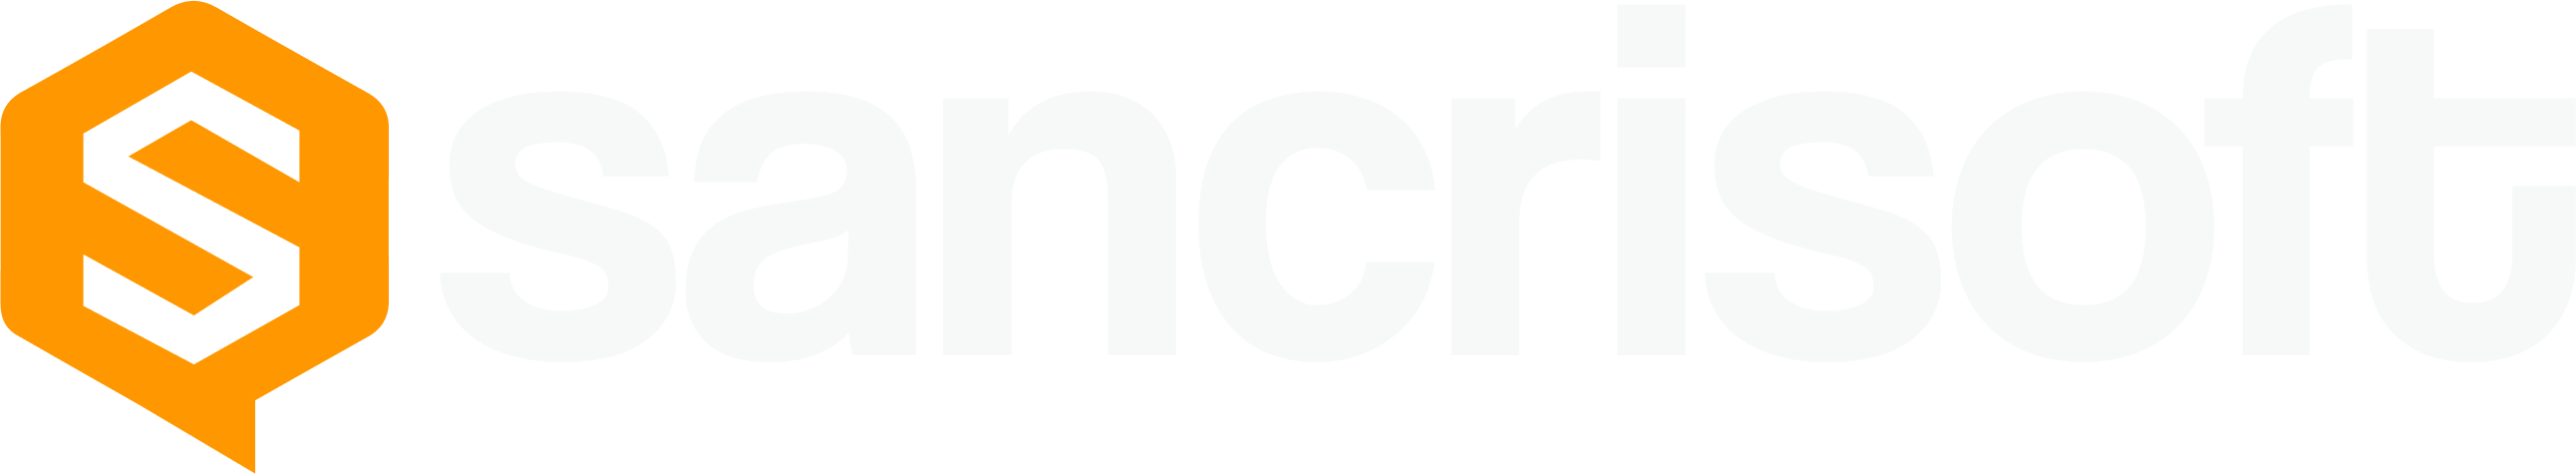 Sancrisoft logo